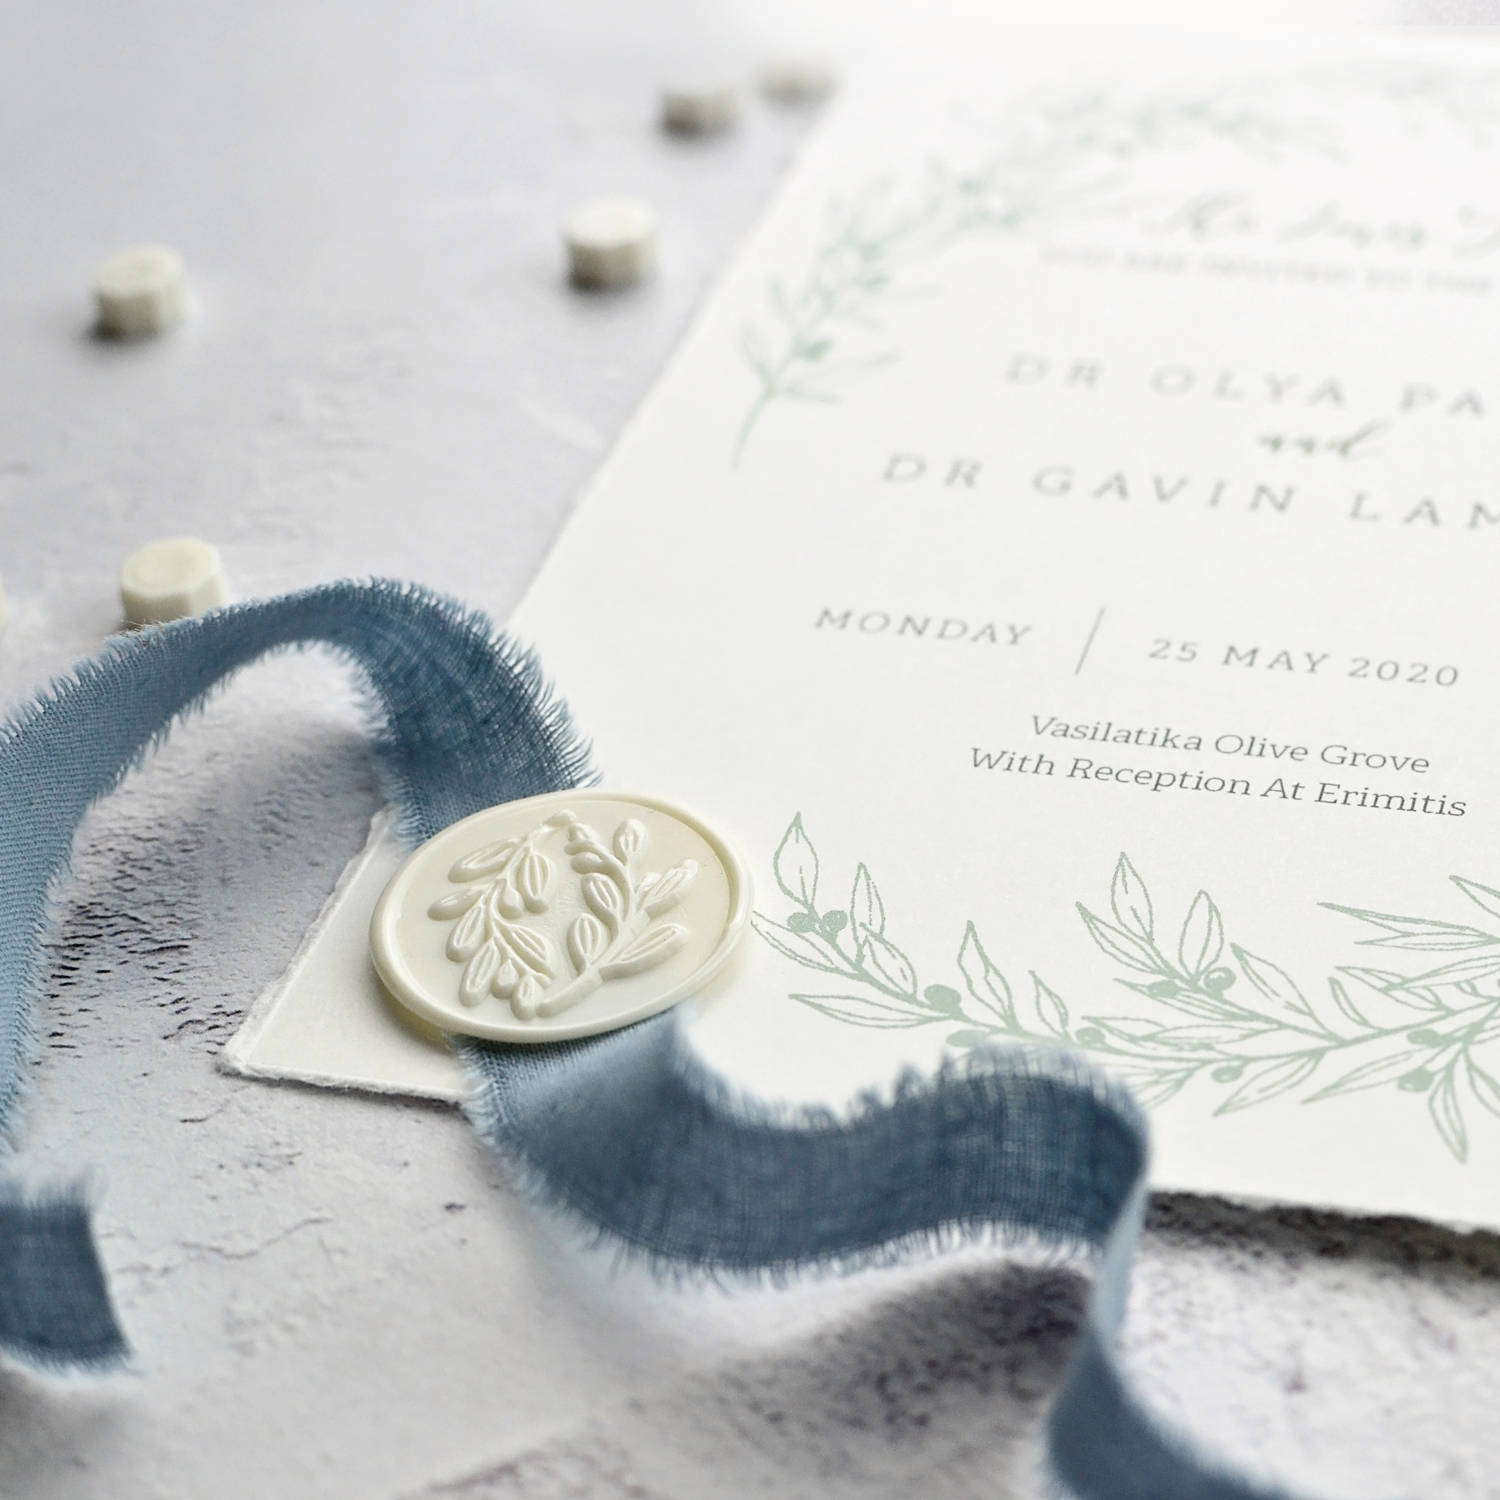 Bespoke olive grove wedding invitation